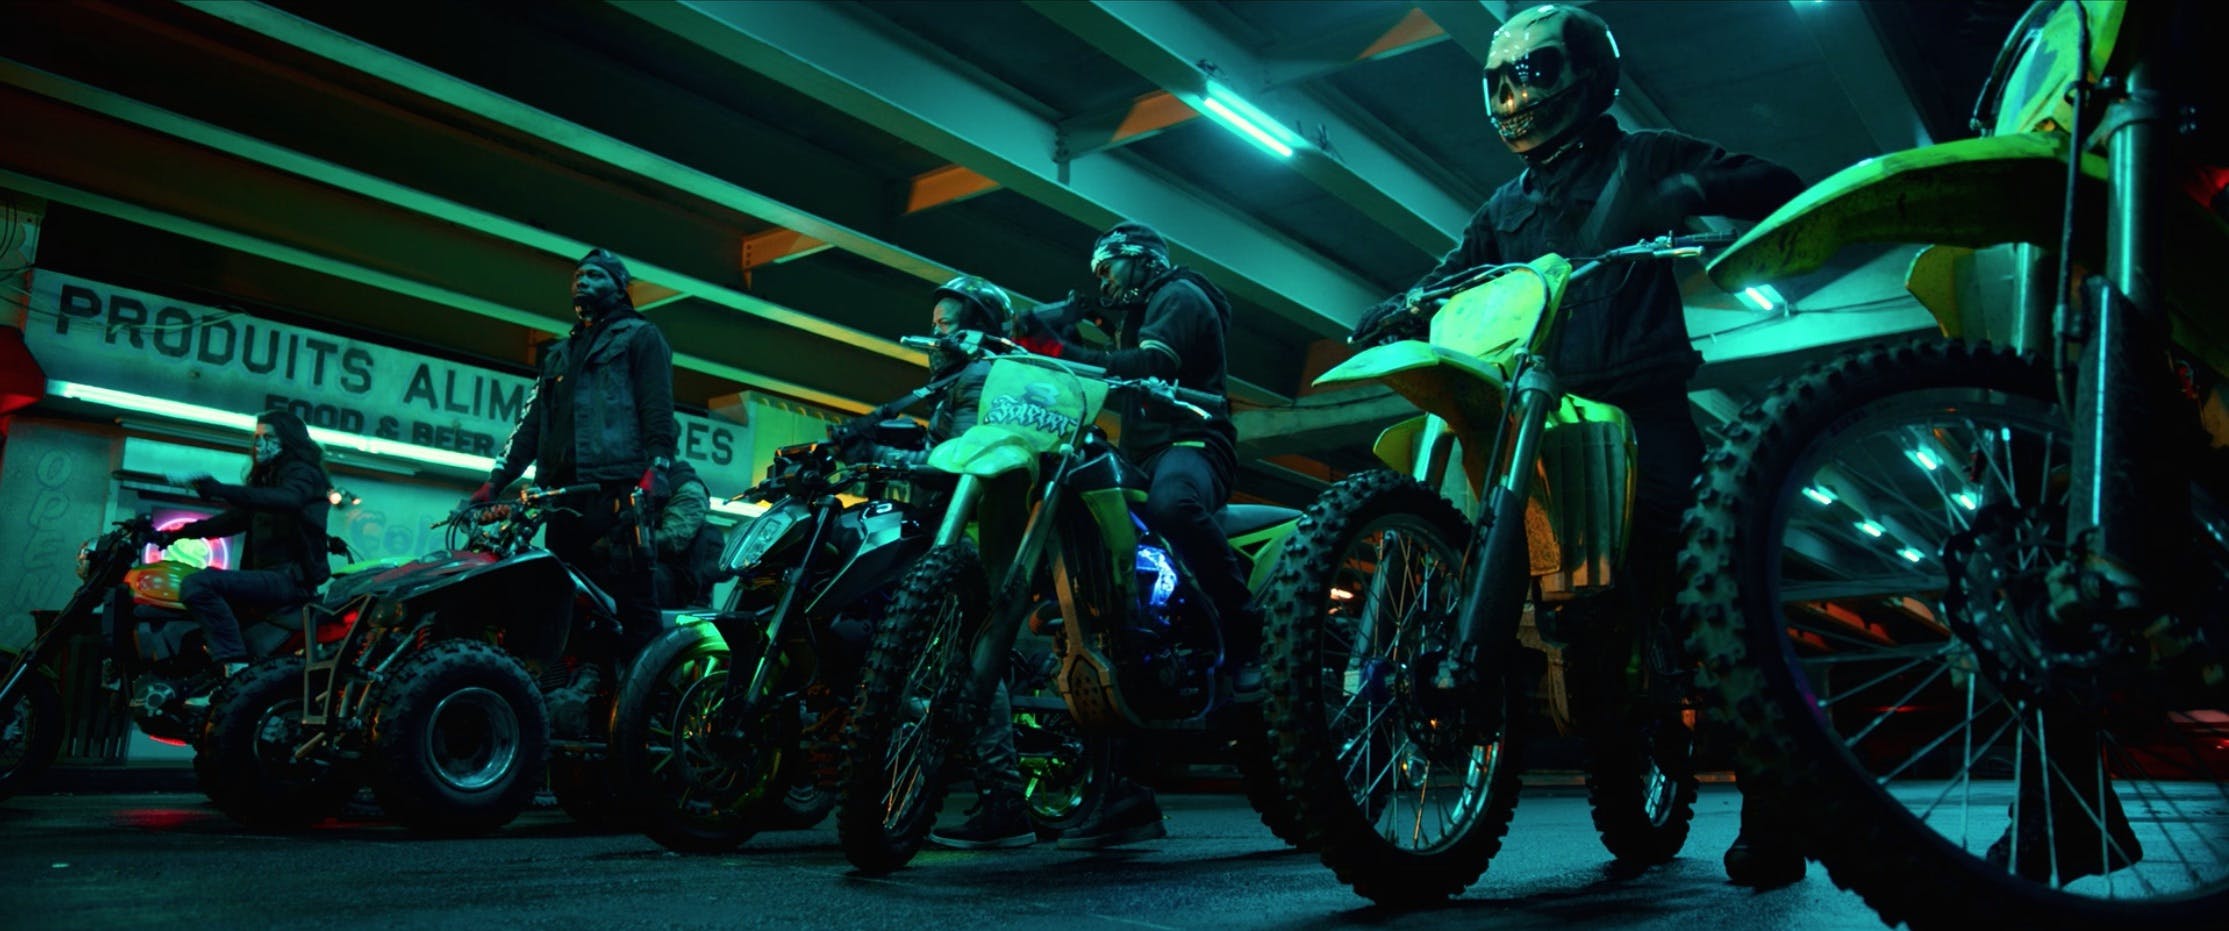 Bad Boys For Life urban motocross rider gang